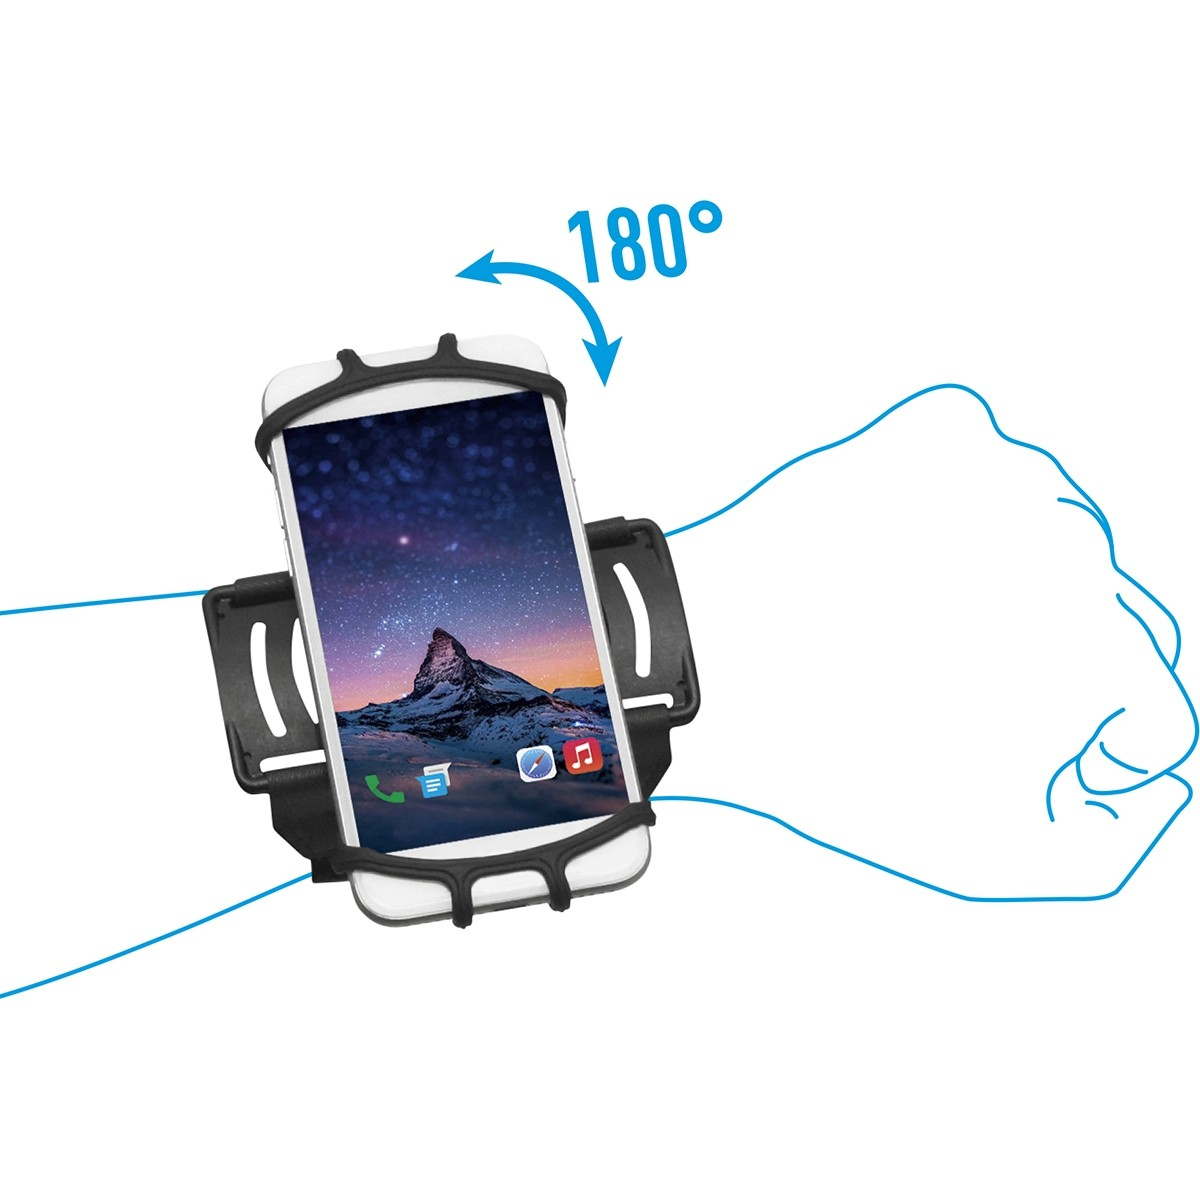 Altijd Kust slinger Mobilis Wrist/Arm Band for smartphone and handheld device (030004) kopen »  Centralpoint